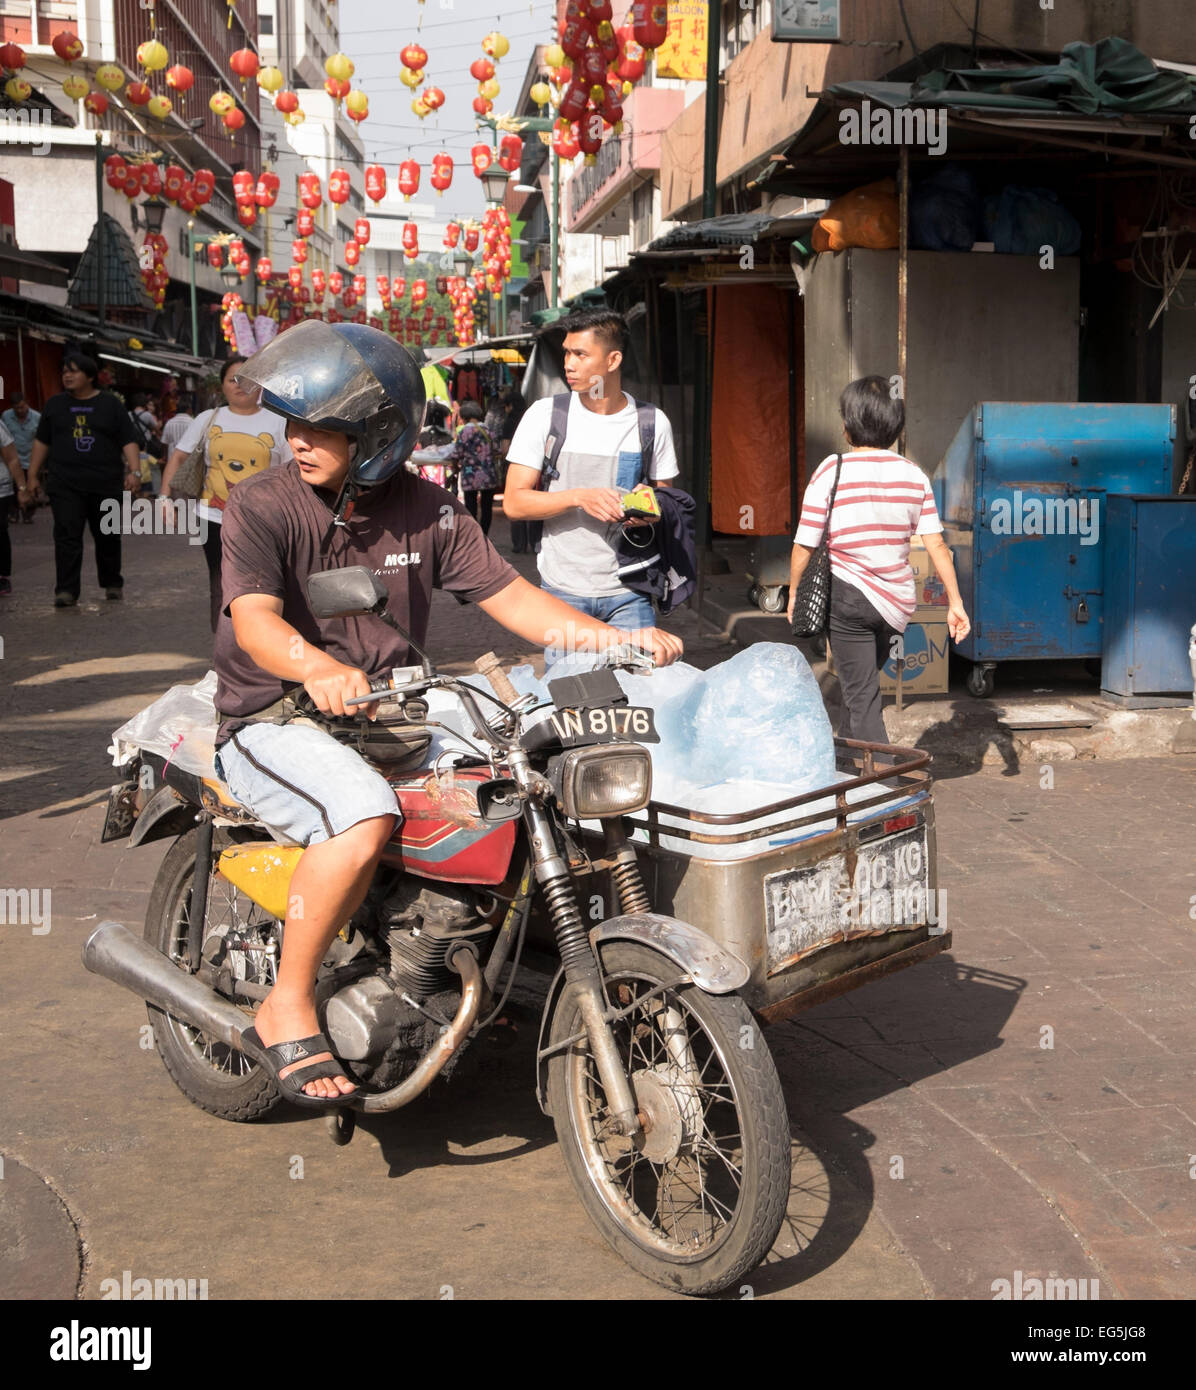 Ice seller on a Honda CG125 motorcycle with homemade sidecar, Chinatown, Kuala Lumpur, Malaysia. Stock Photo